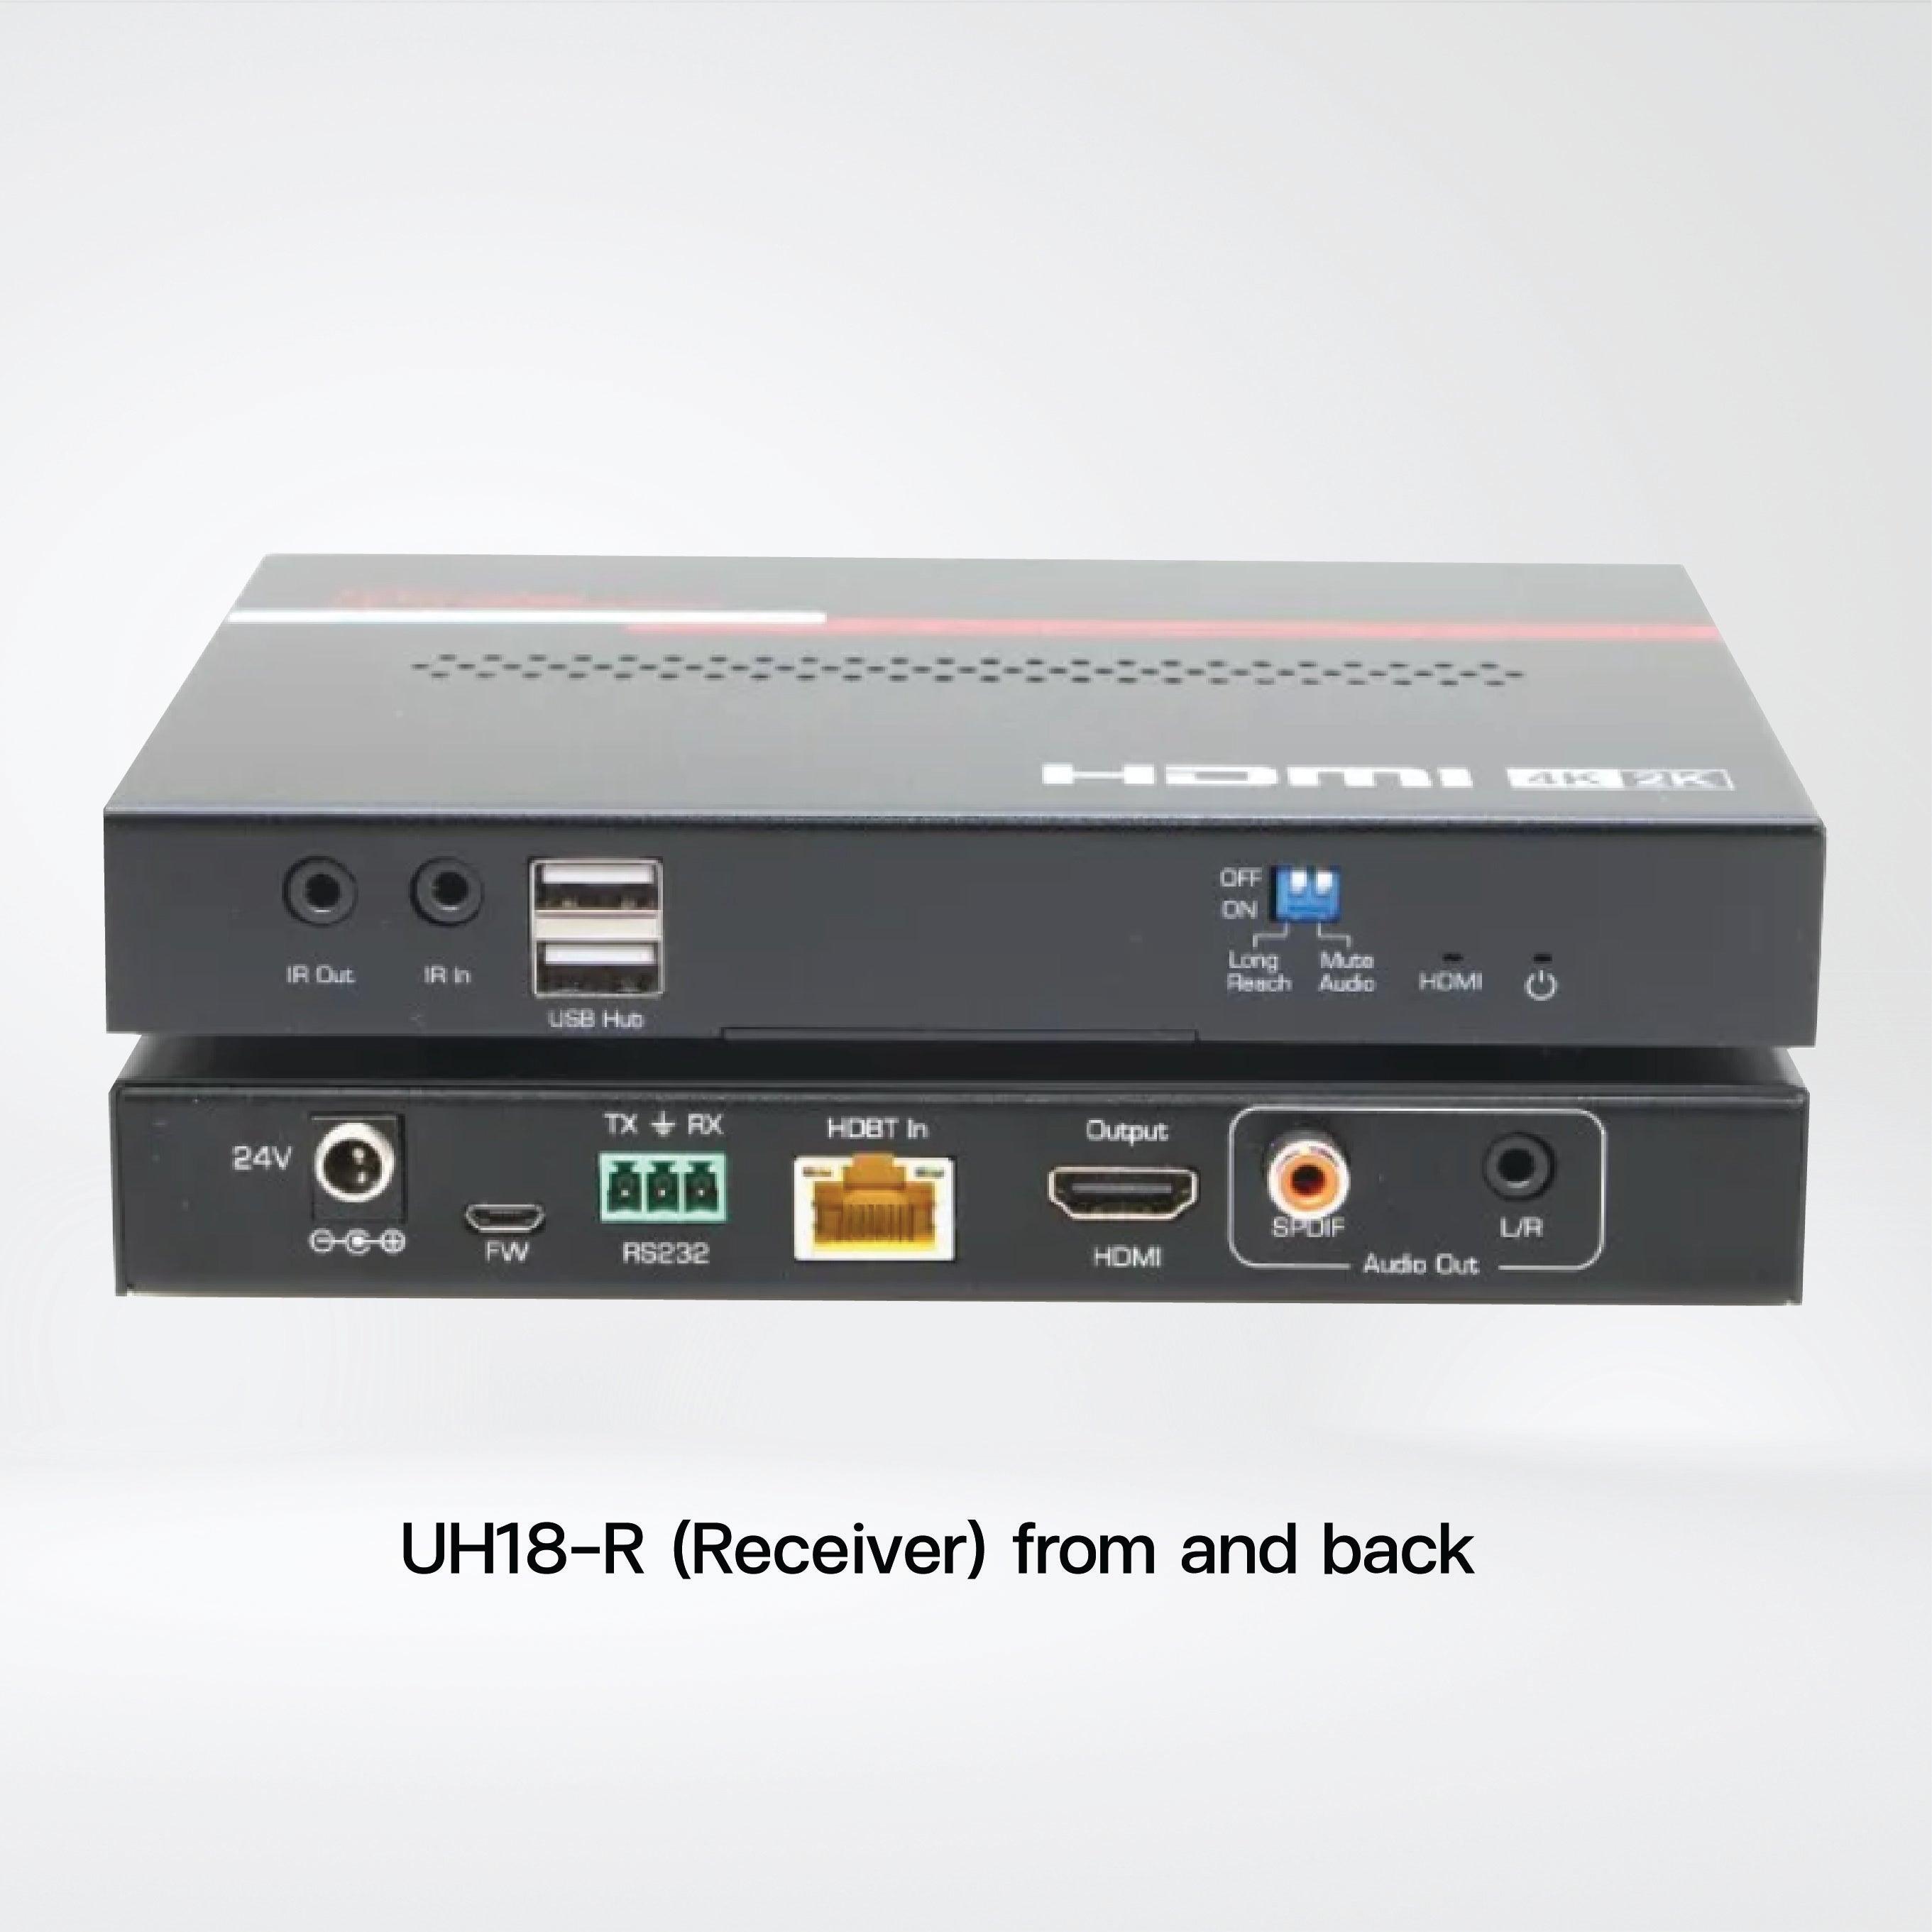 UH18-R 4K Video and USB HDBaseT 2.0 Extender (Sender + Receiver) - Riverplus